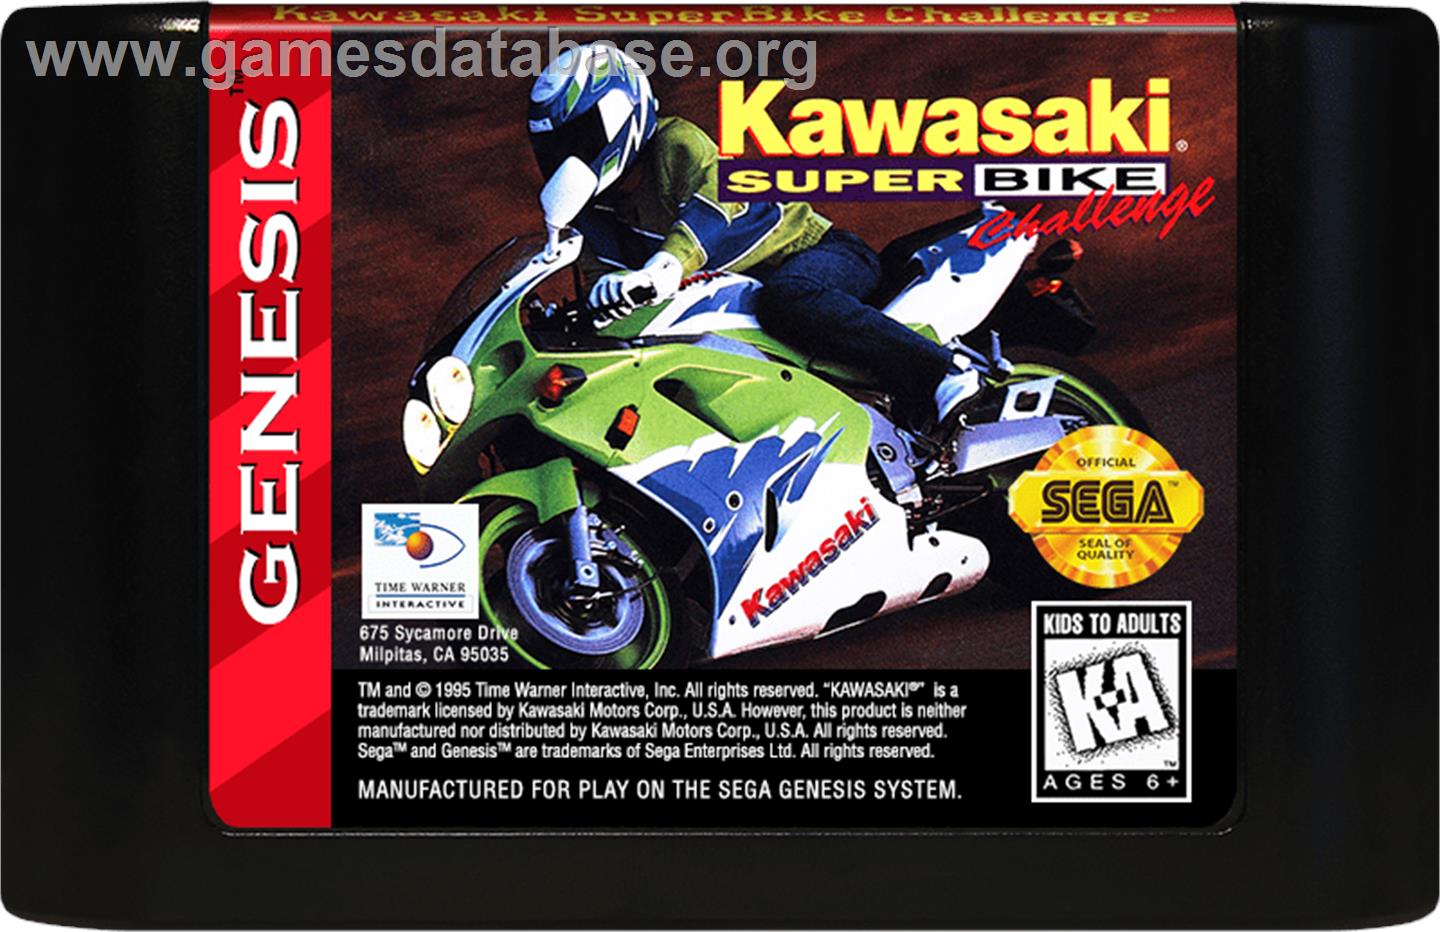 Kawasaki Superbike Challenge - Sega Genesis - Artwork - Cartridge